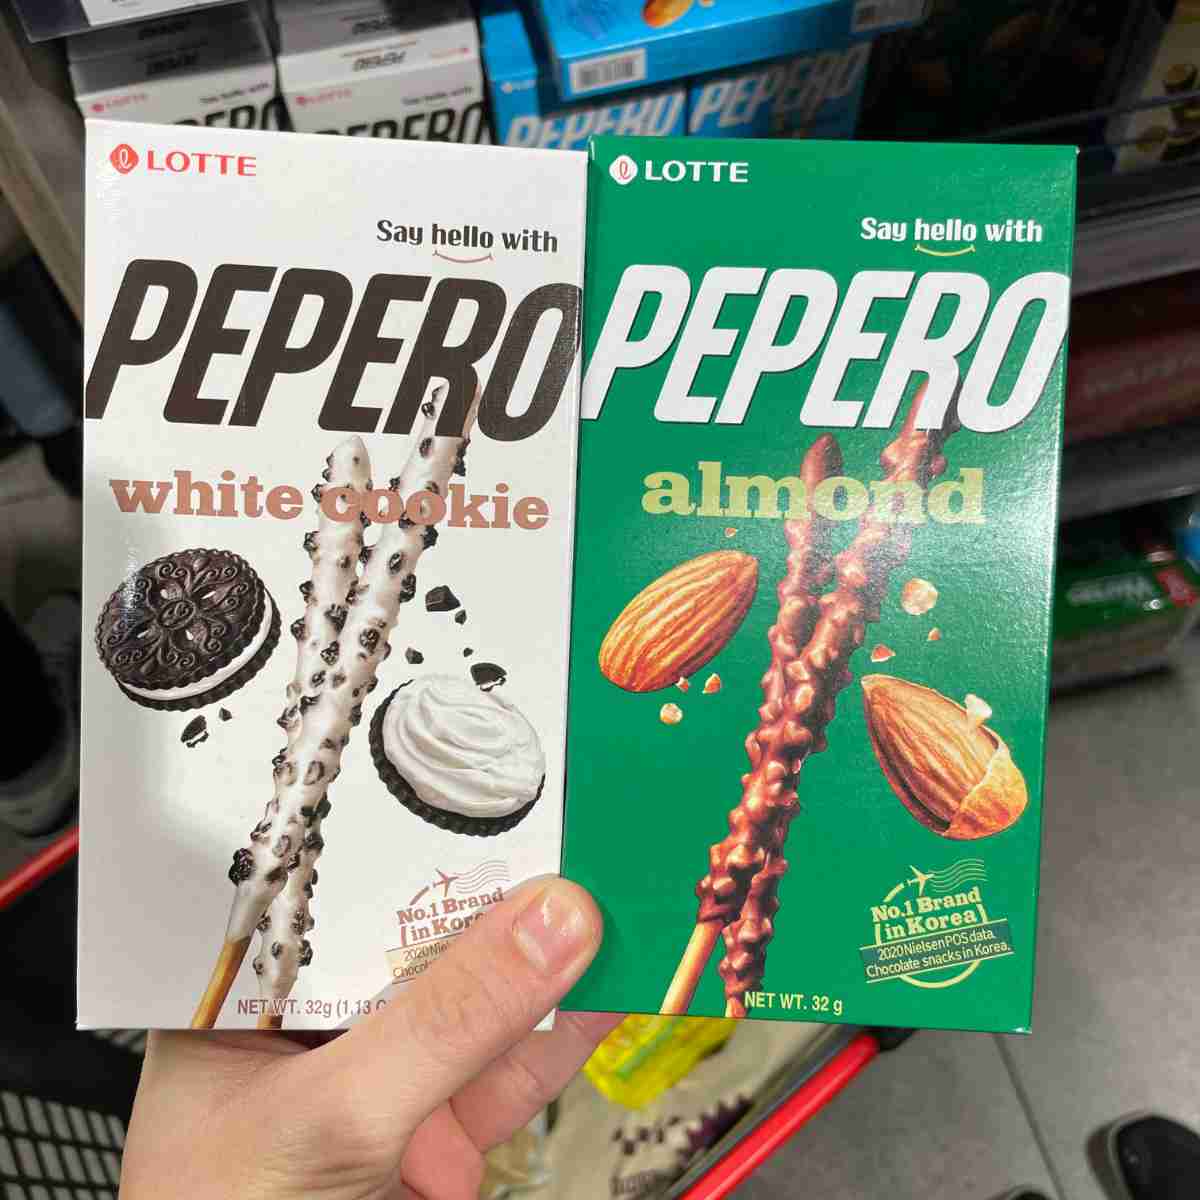 Pepero sticks